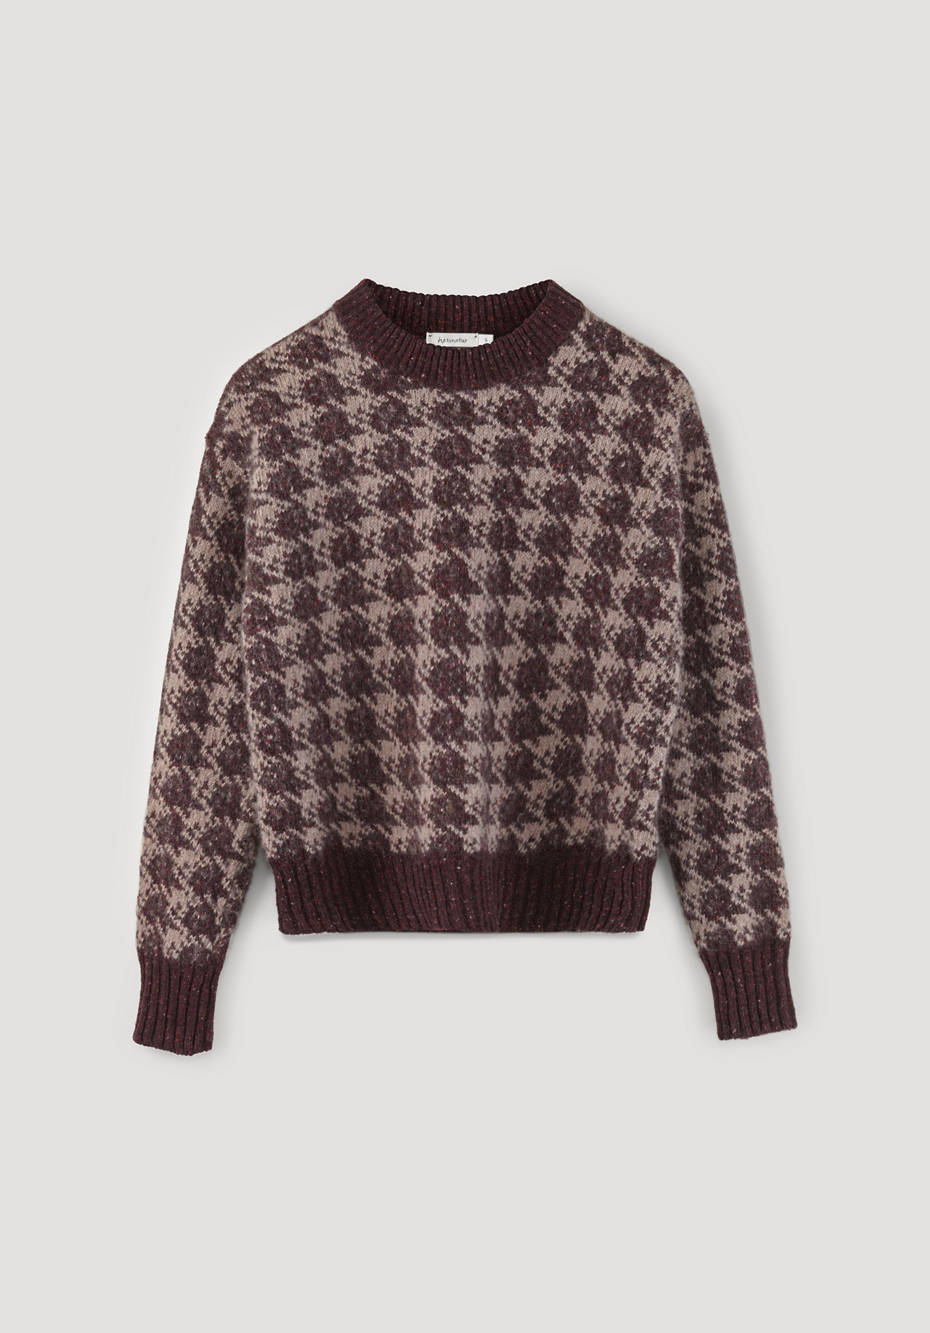 New wool jacquard sweater with alpaca